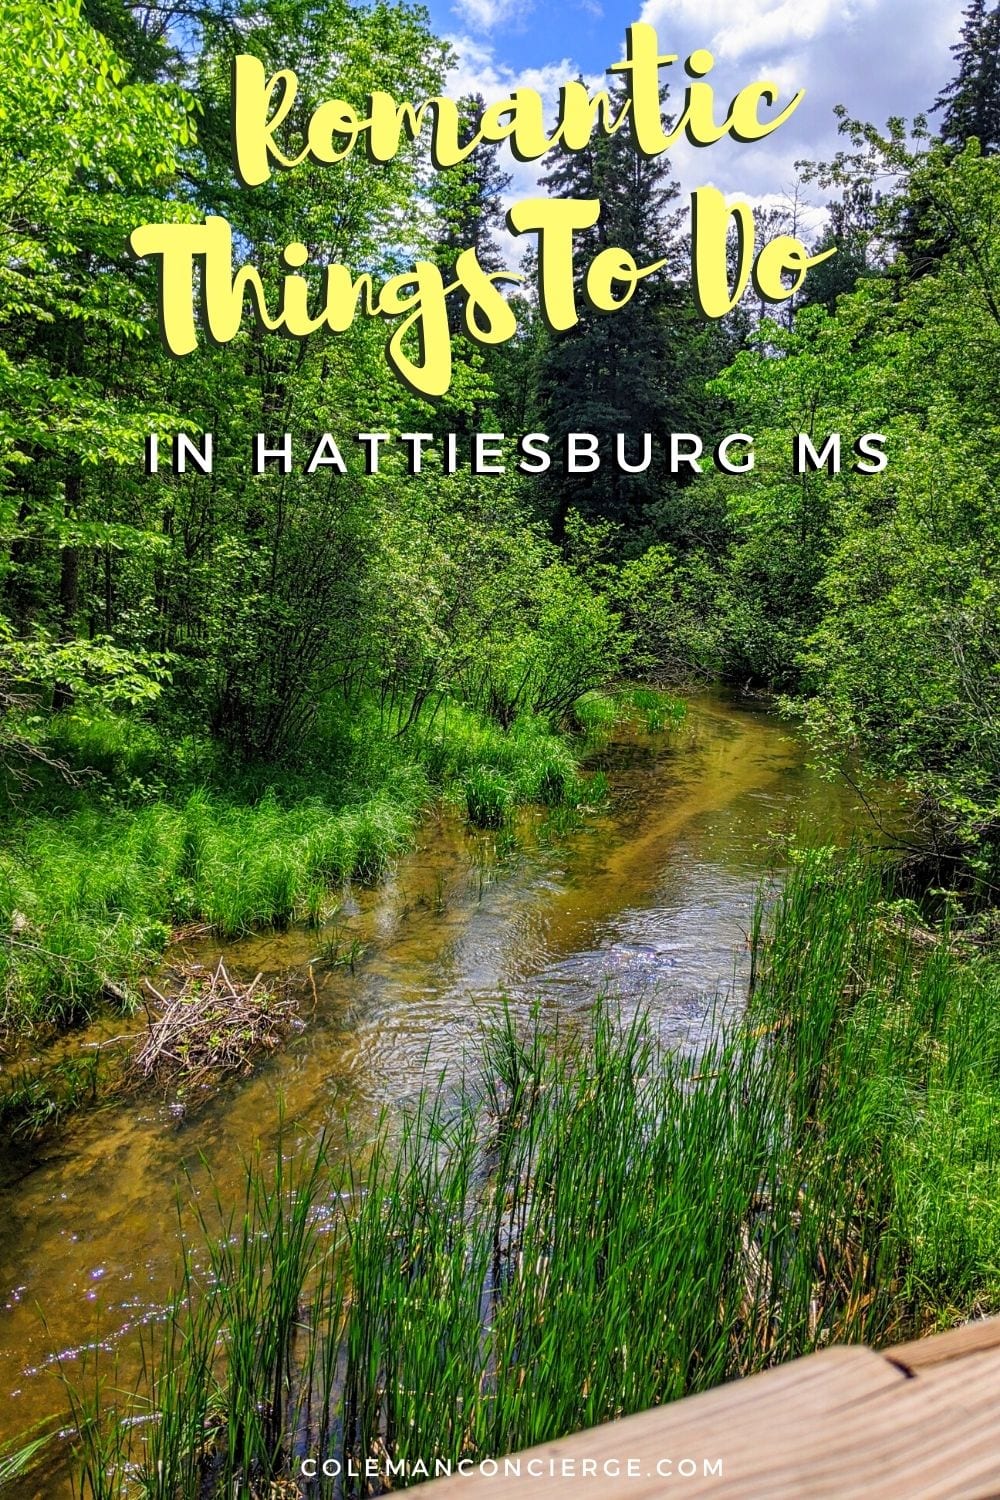 Creek in Hattiesburg Ms